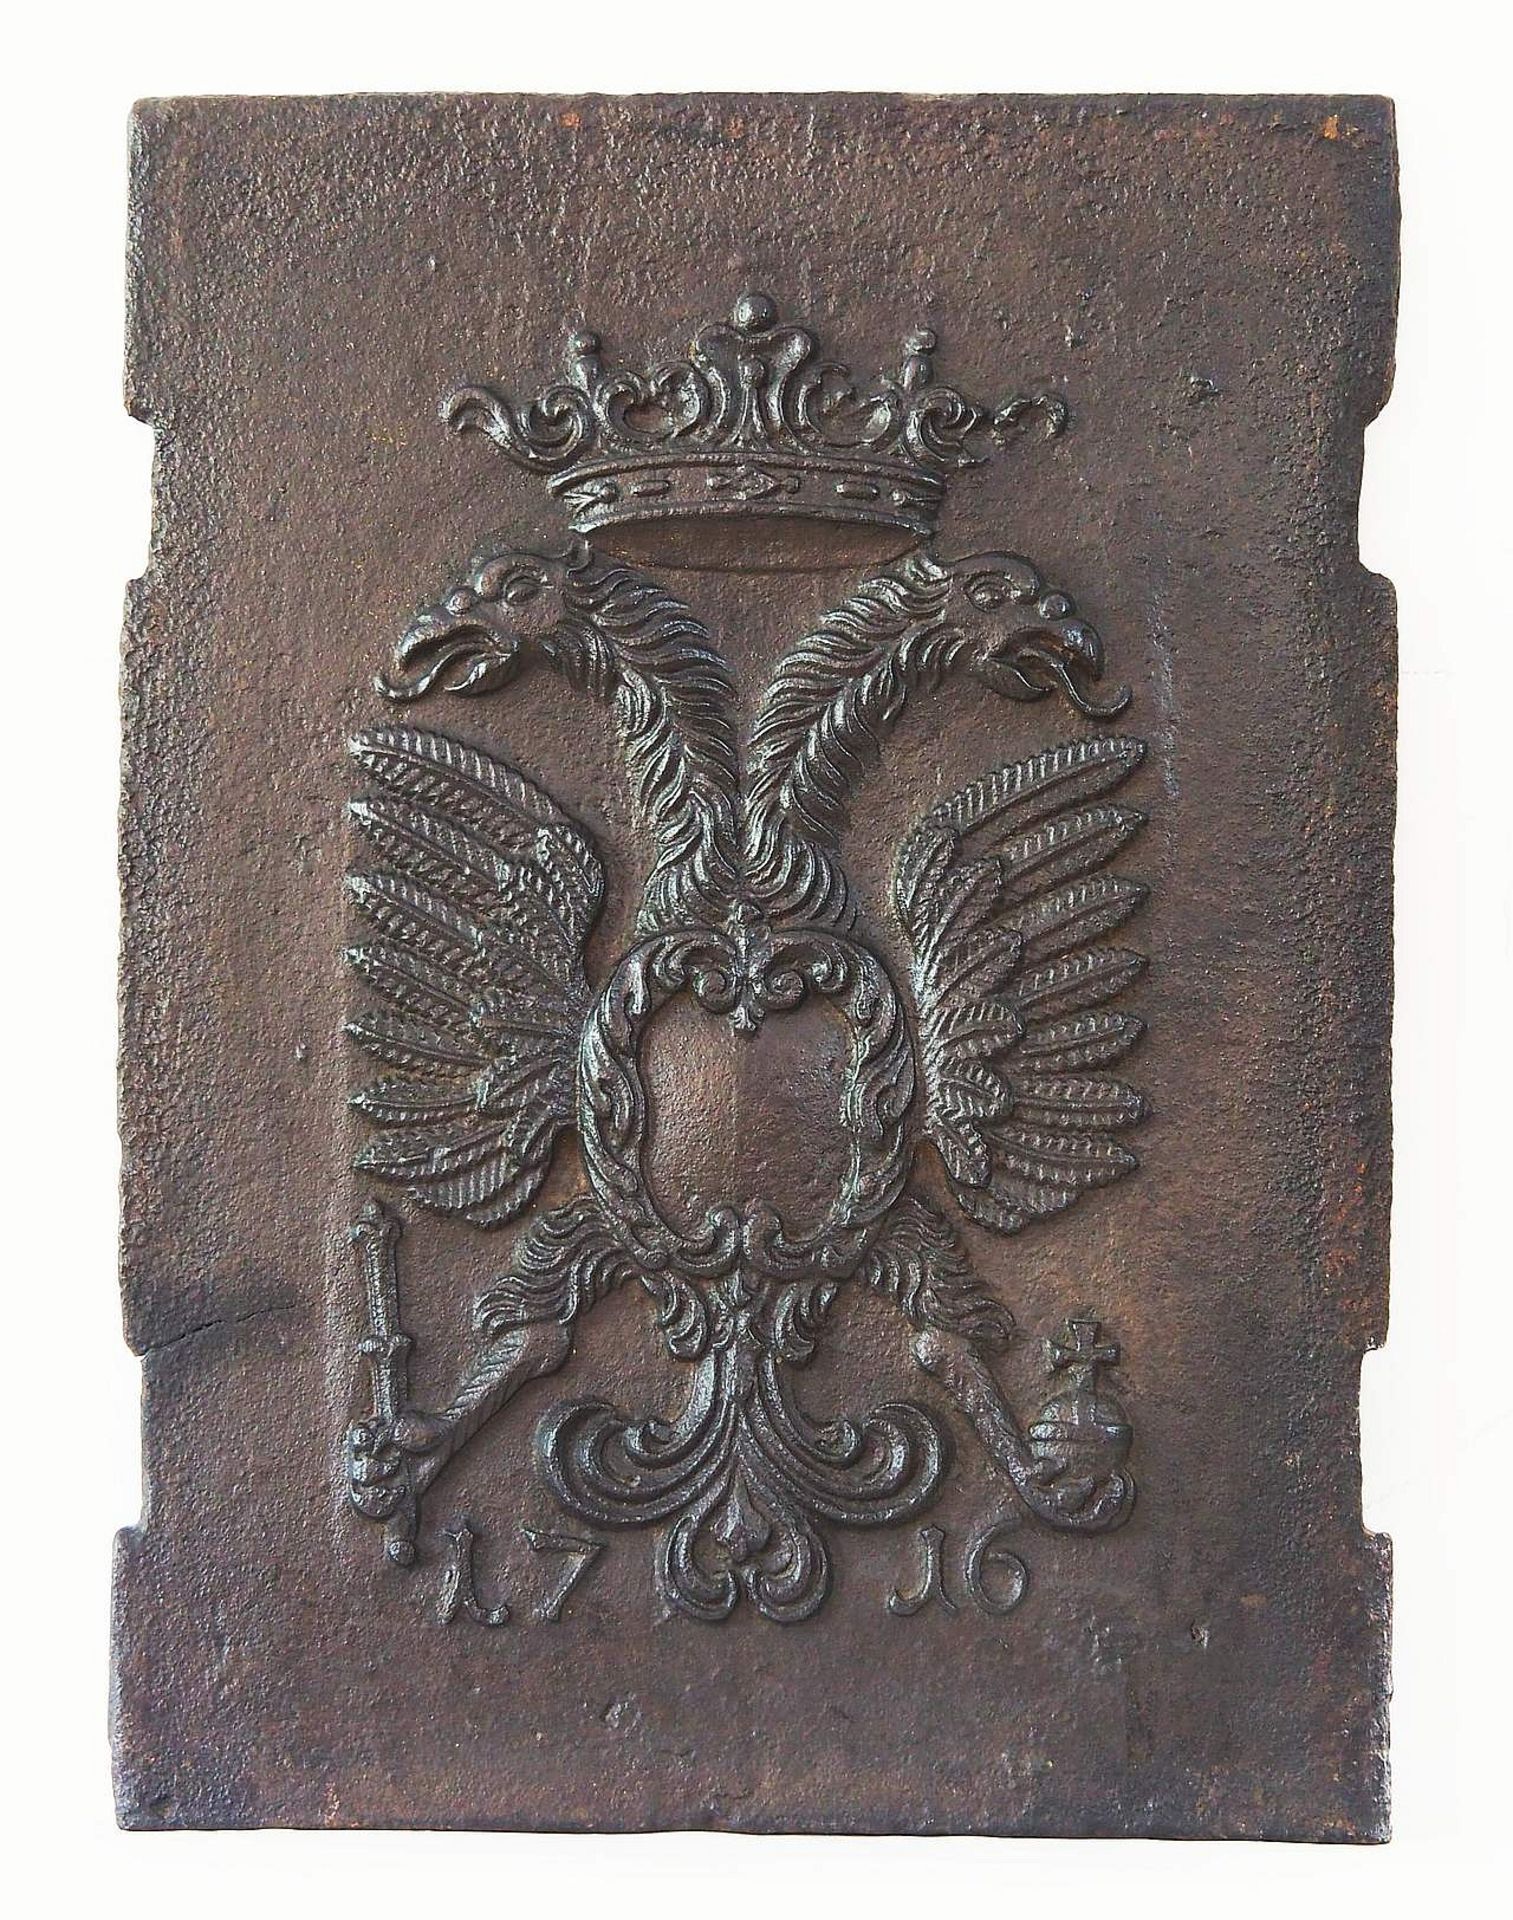 Gusseiserne Kaminplatte, wohl Anfang 19. Jahrhundert.  - Bild 2 aus 5